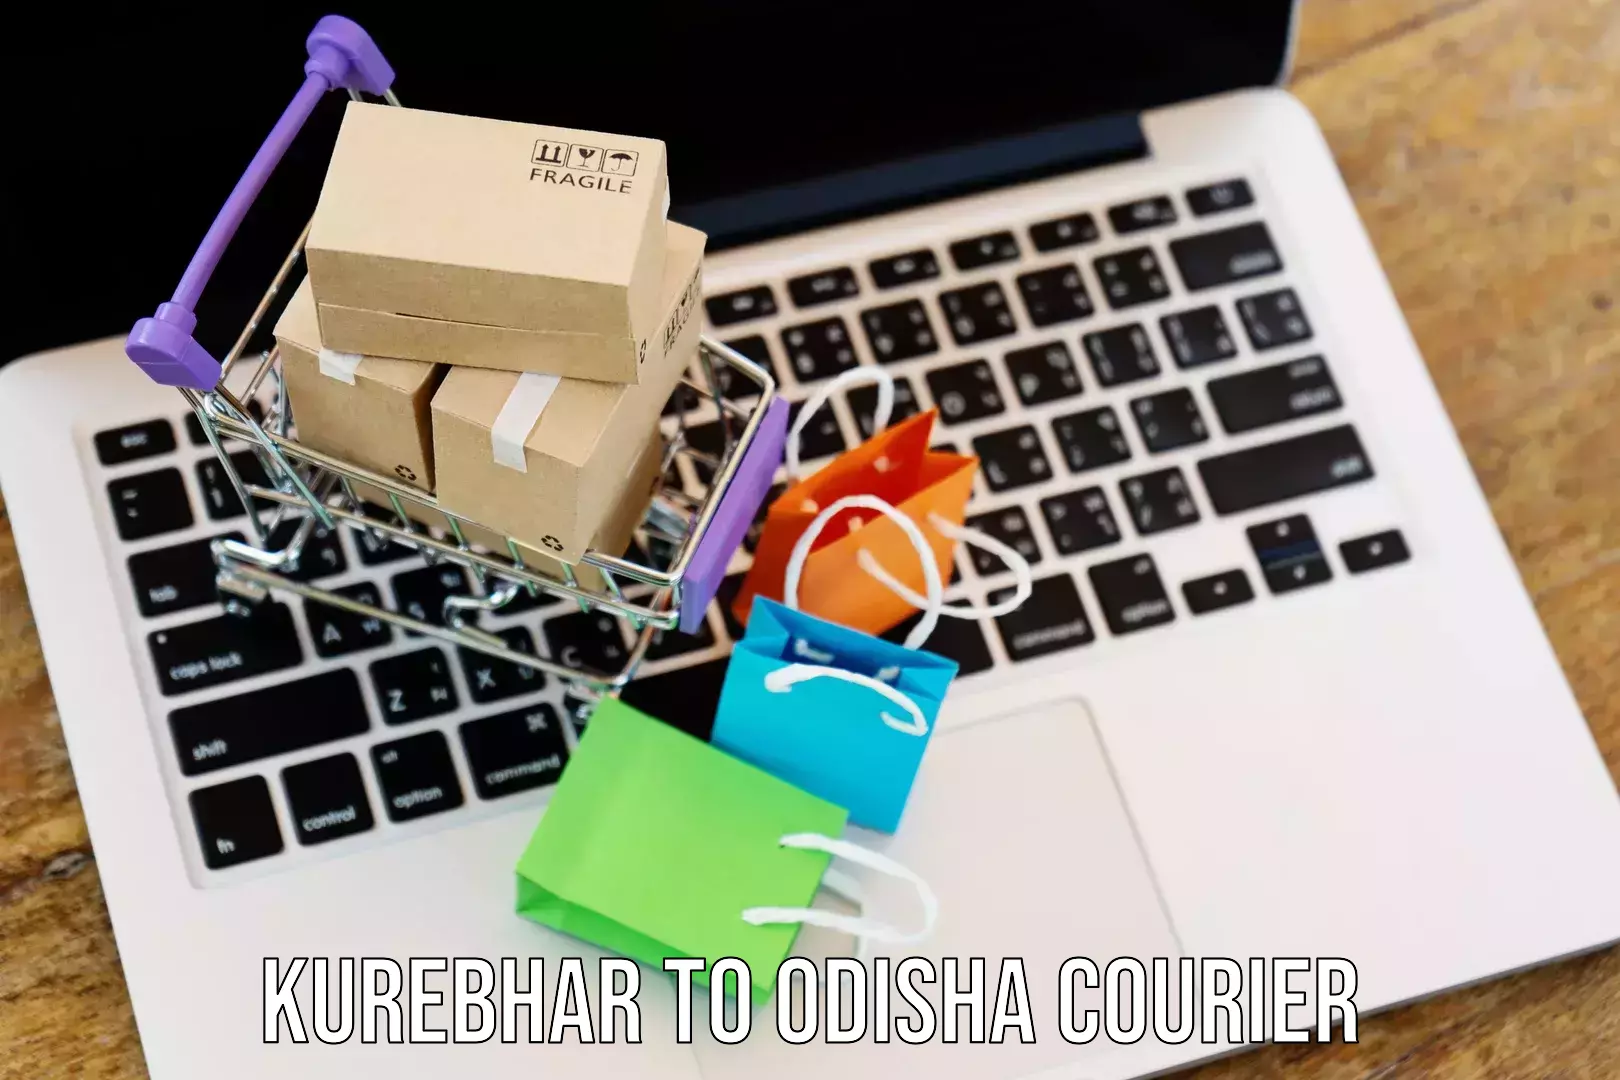 Quick dispatch service Kurebhar to Odisha